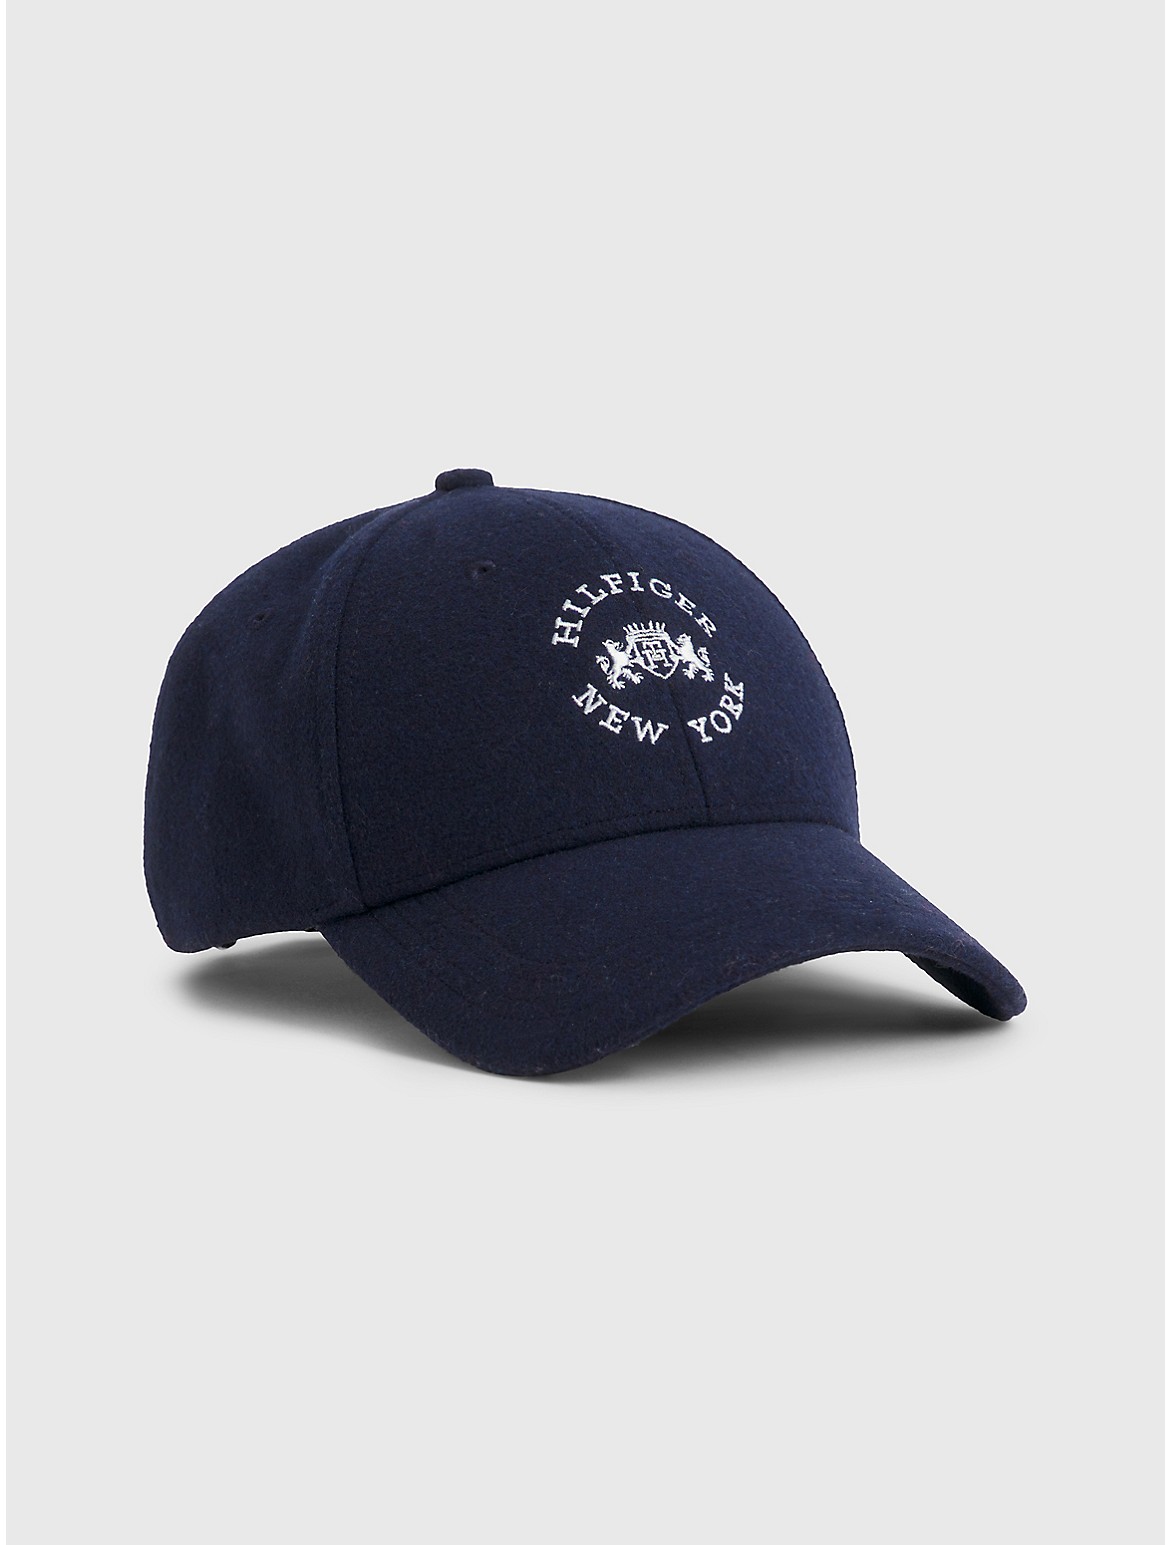 Tommy Hilfiger Women's Heritage Crest Baseball Cap - Blue